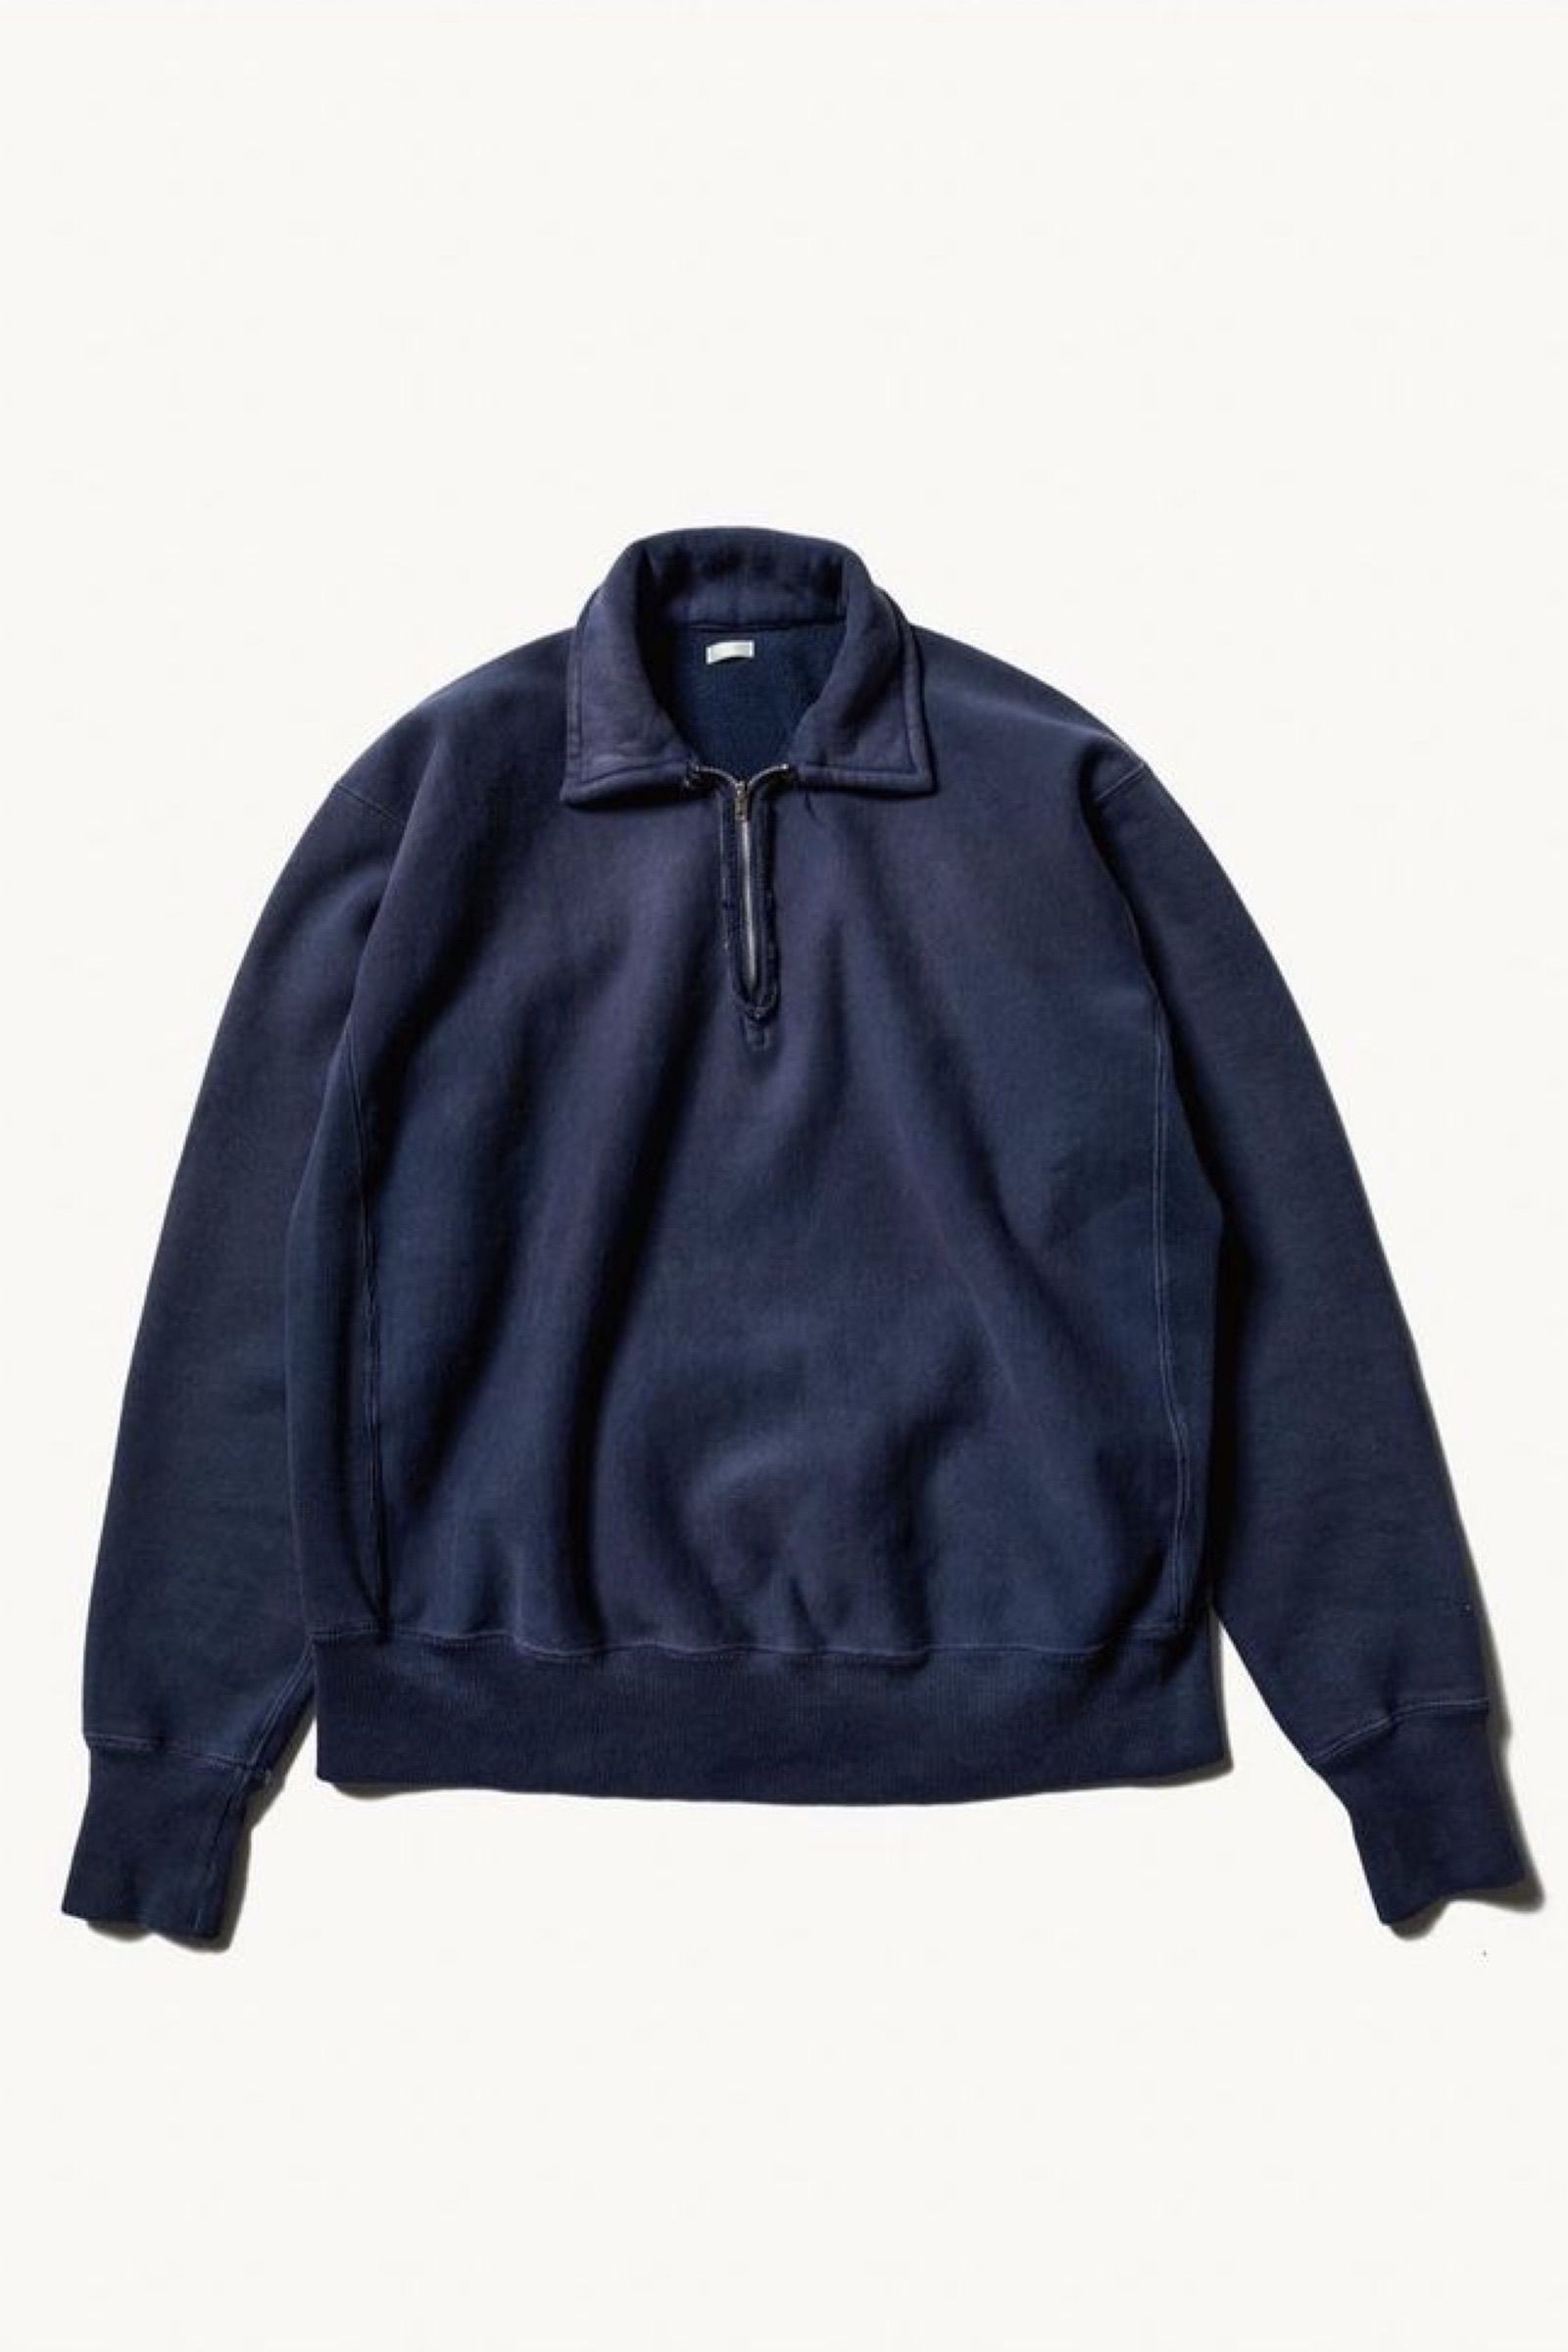 A.PRESSE - vintage half zip sweatshirts -navy- 22aw men 8月27日